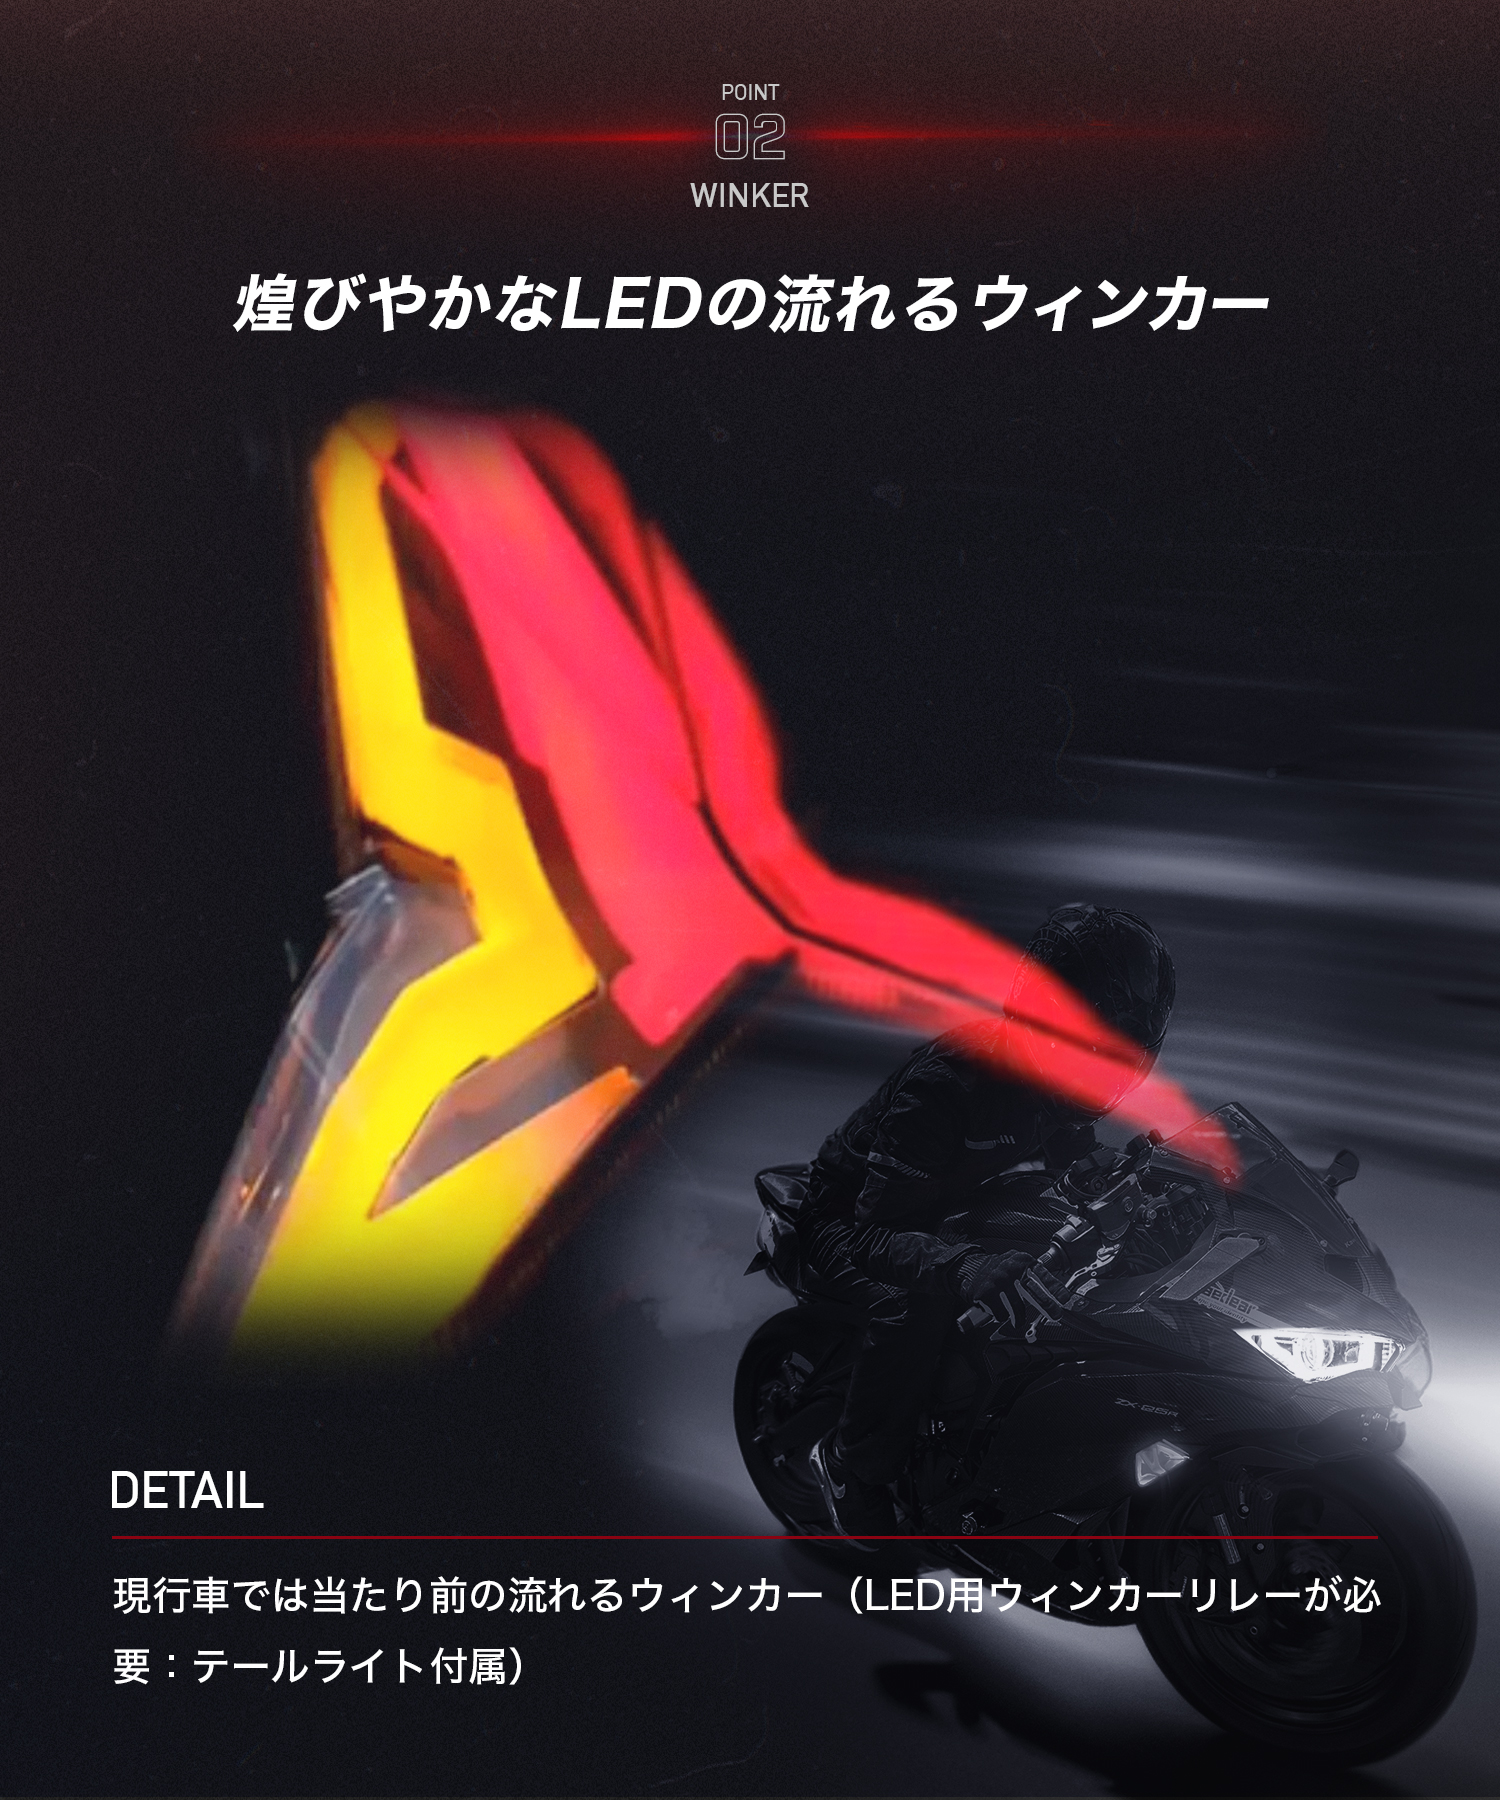 CyberLED( Cyber LED) задний фонарь custom полный LED tail задние фонари kawasaki ninja ZX25R